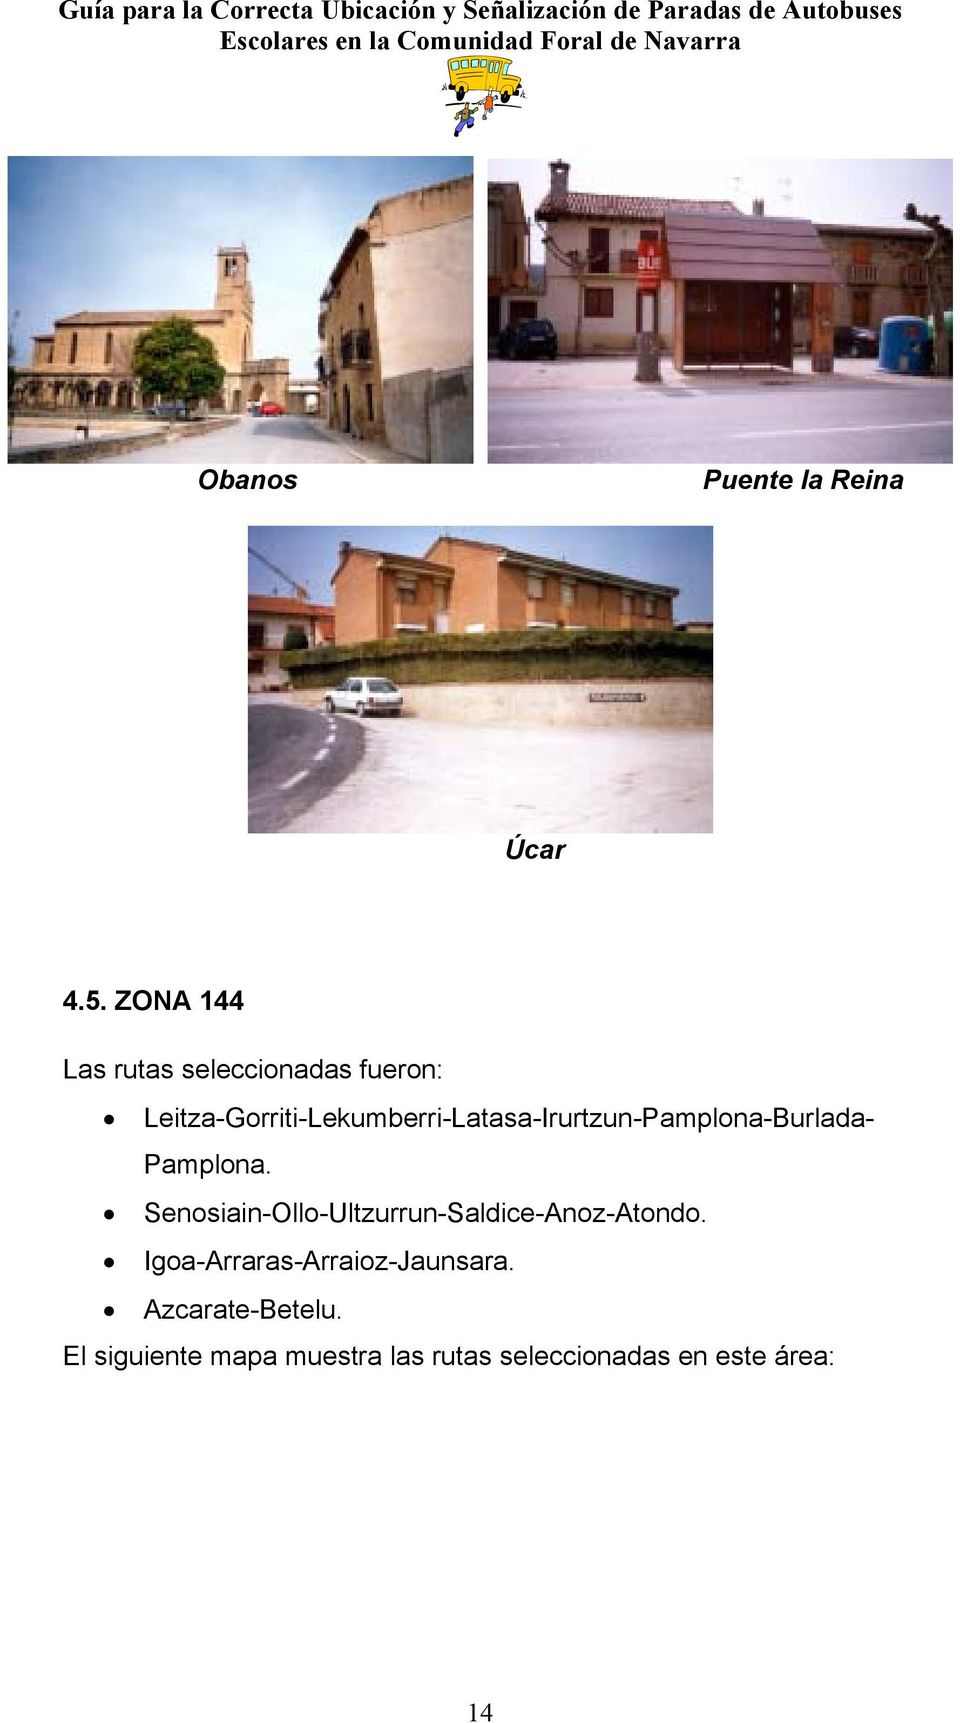 Leitza-Gorriti-Lekumberri-Latasa-Irurtzun-Pamplona-Burlada- Pamplona.